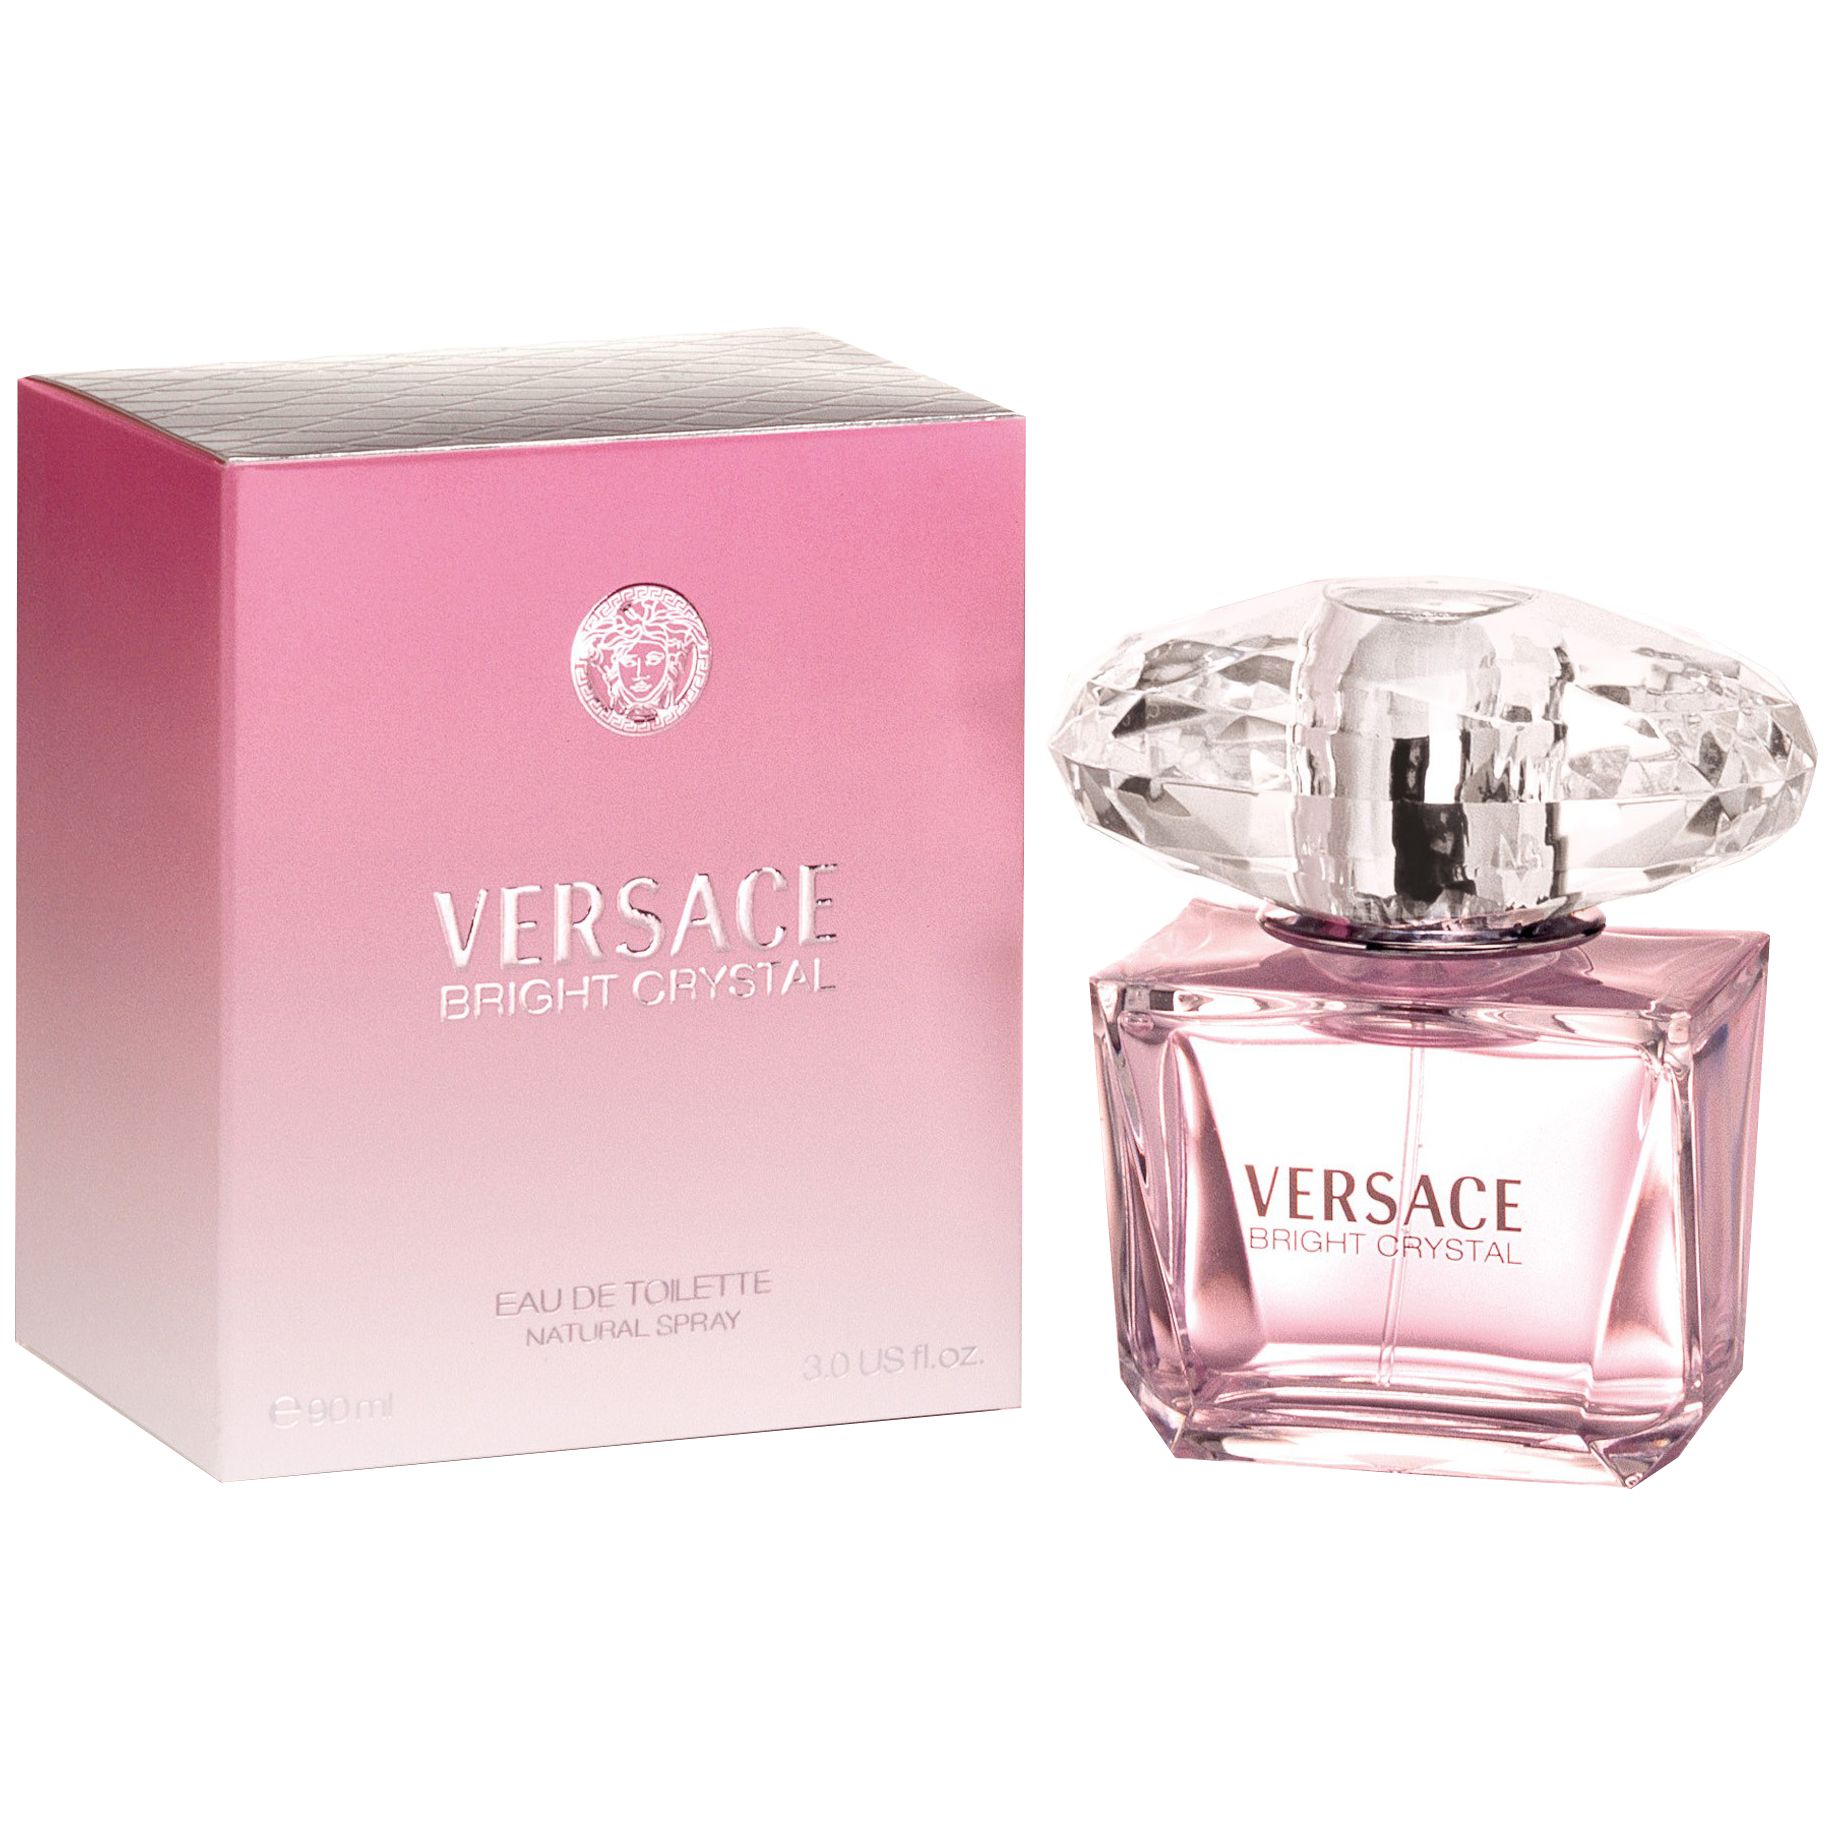 versace bright light perfume